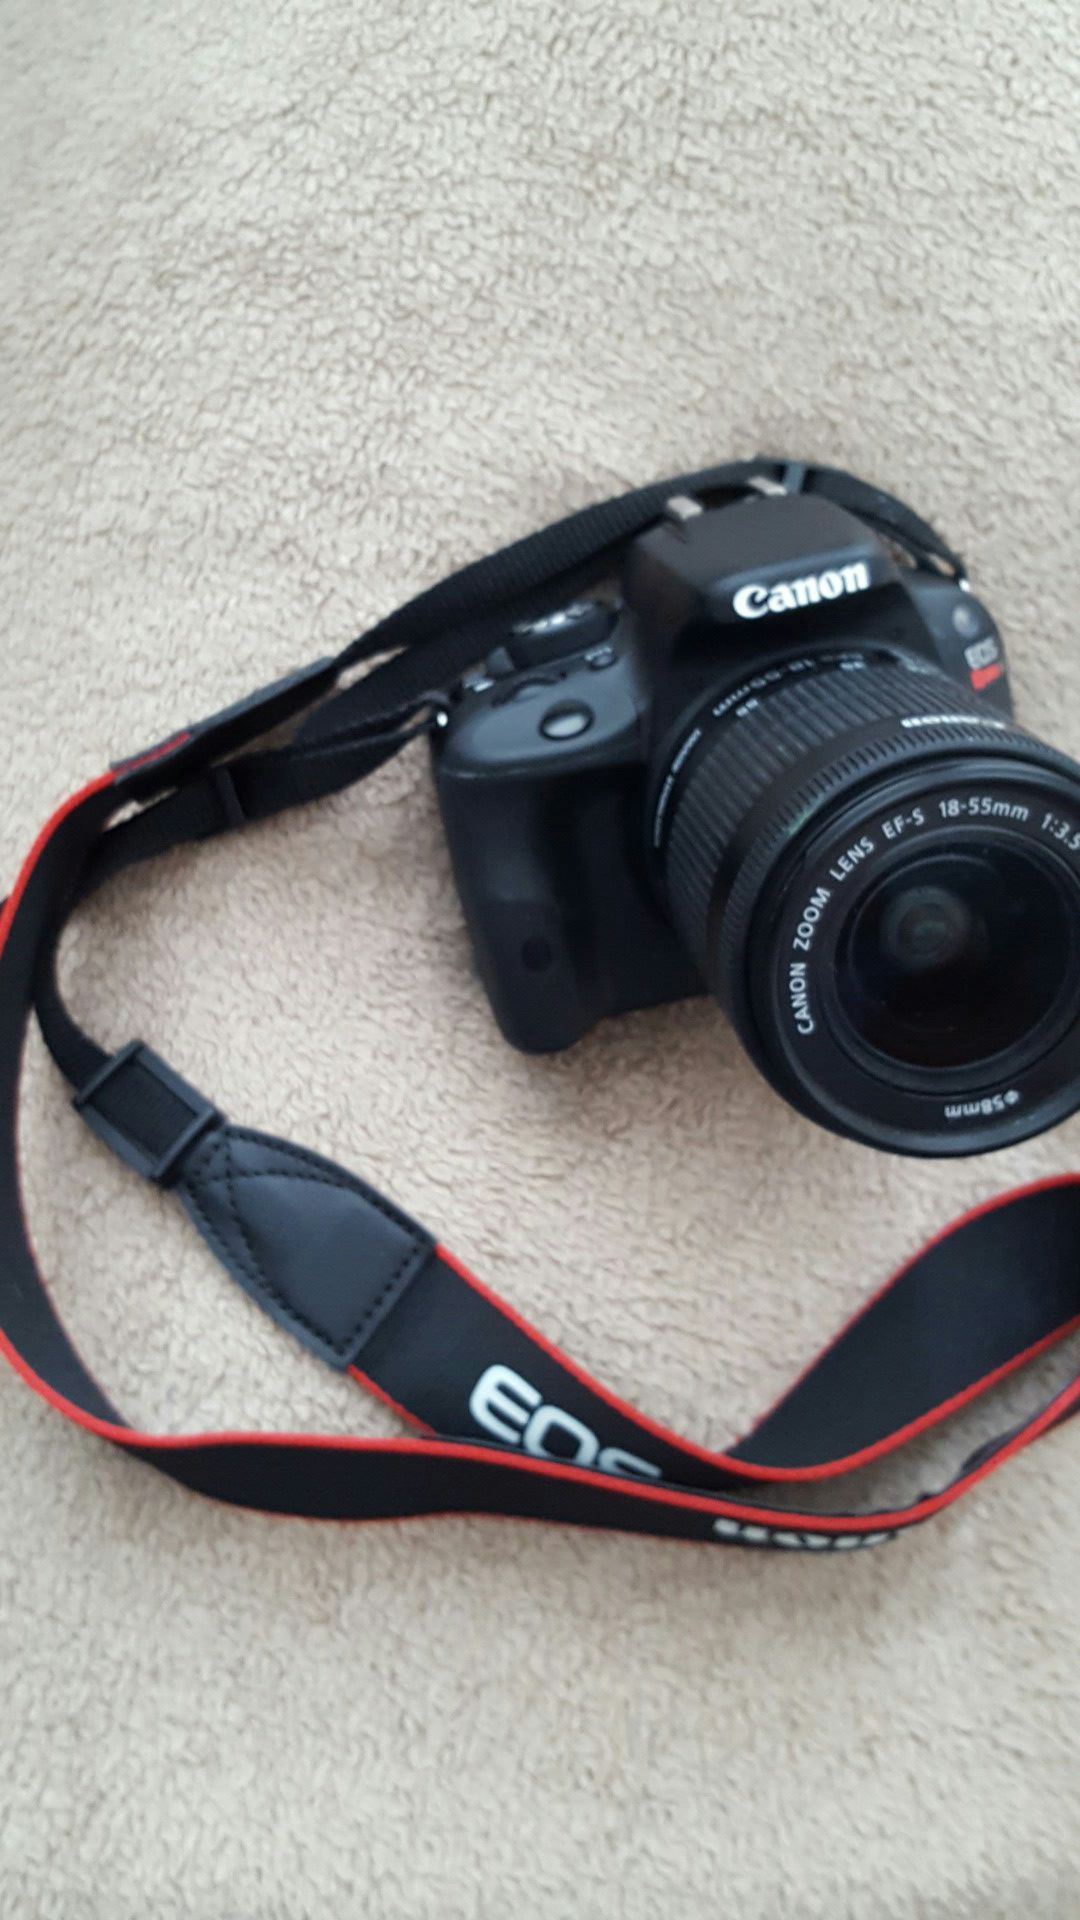 Canon EOS rebel camera